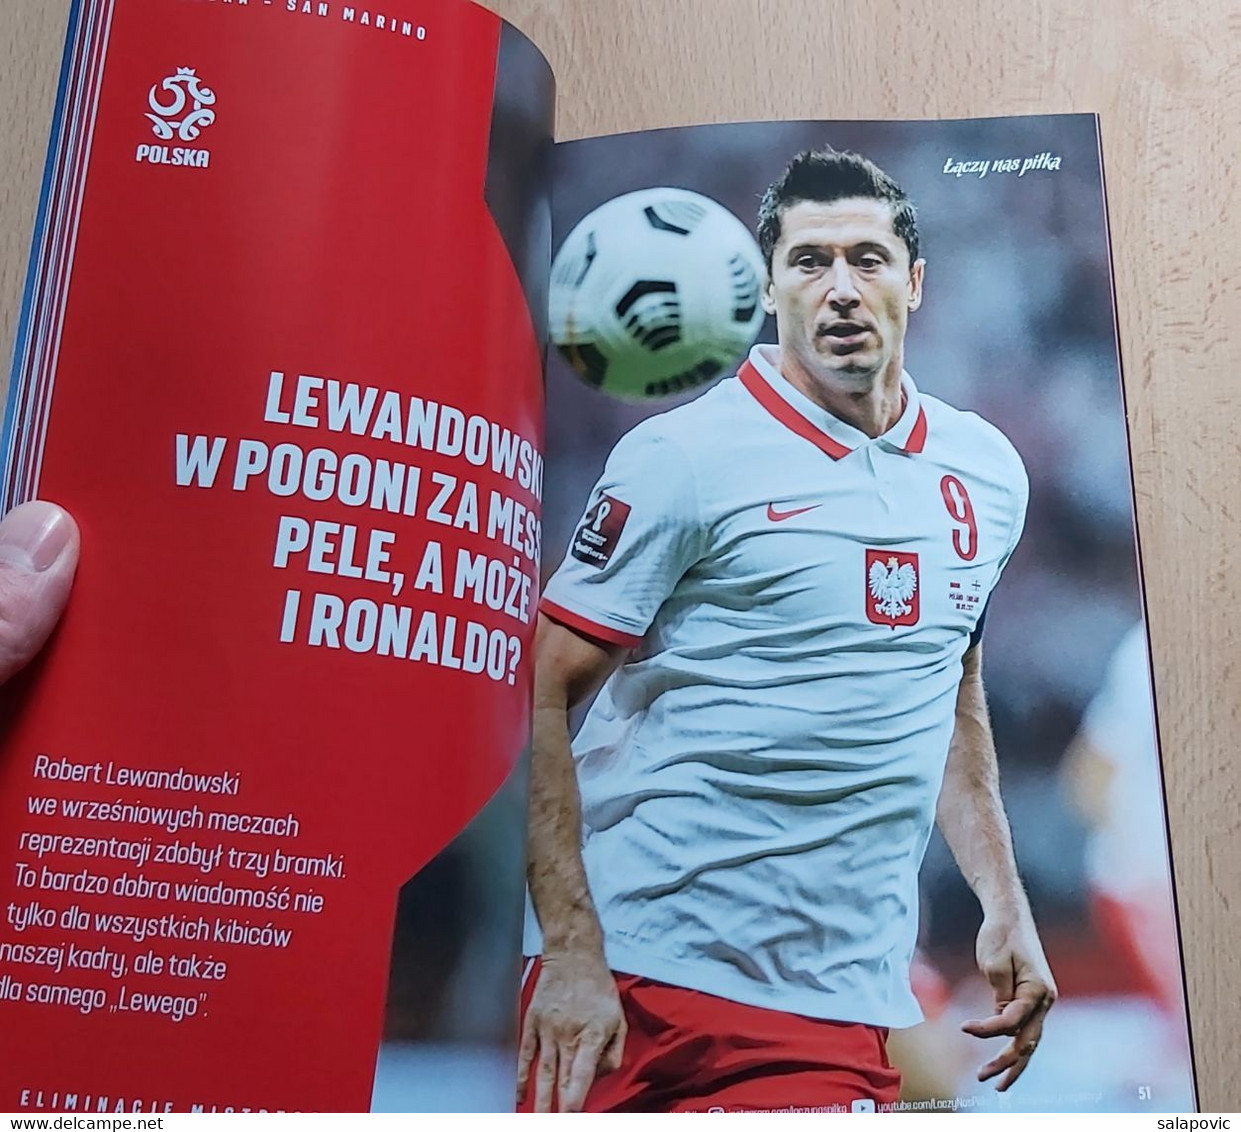 Poland V San Marino QUALIFICATIONS FOR FIFA WORLD CUP QATAR 2022, 9. 10. 2021 FOOTBALL CROATIA FOOTBALL MATCH PROGRAM - Libri